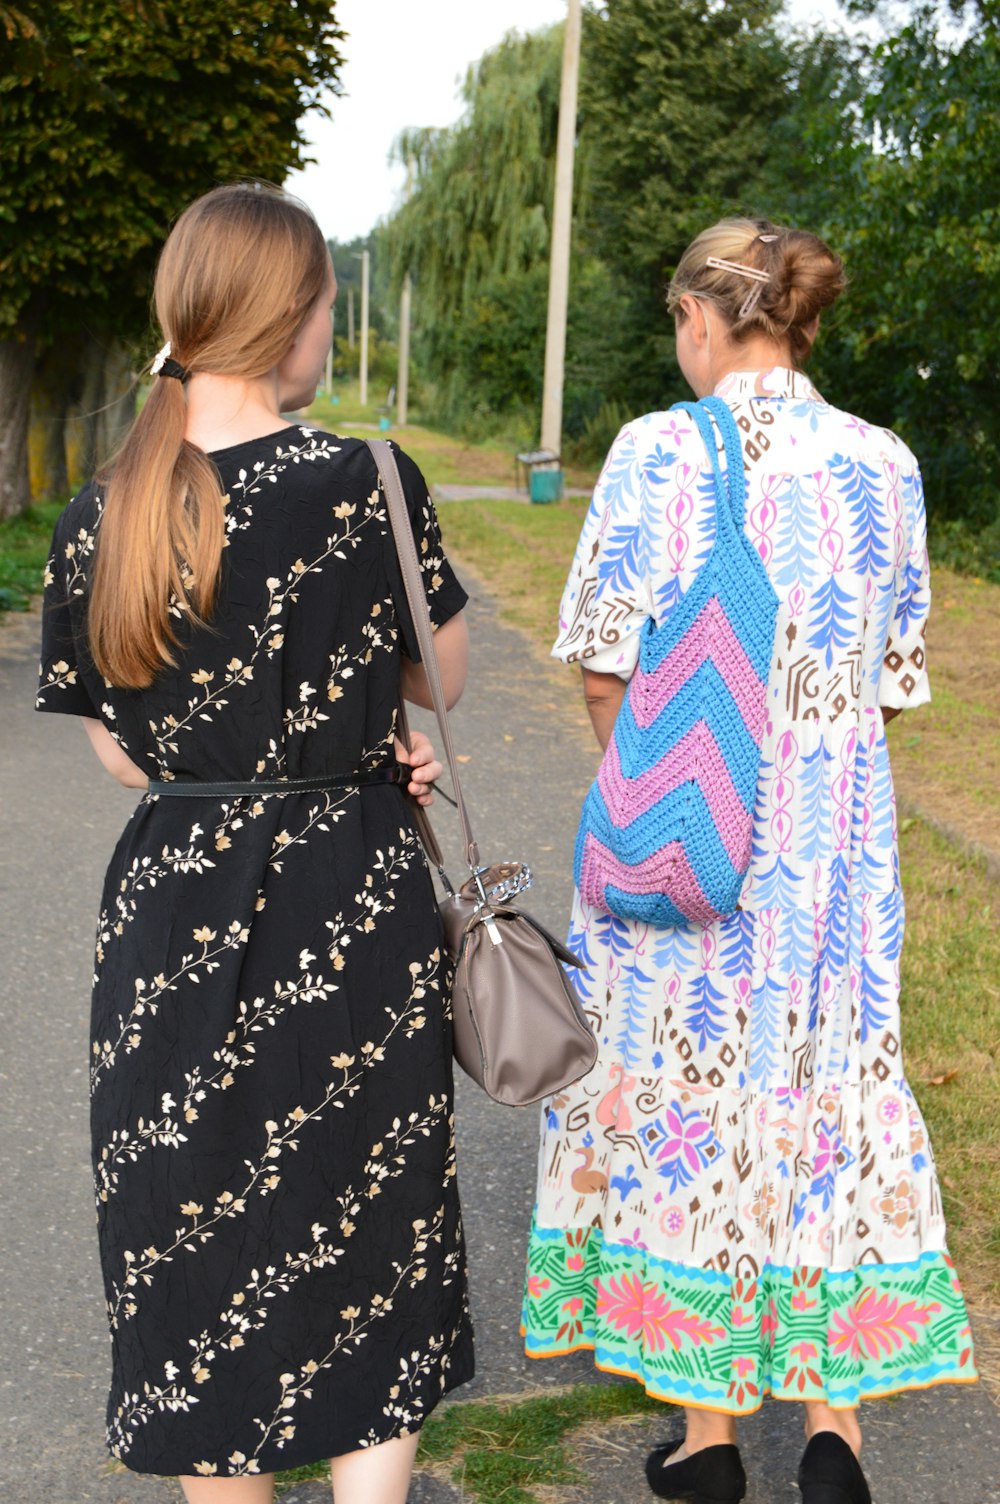 two women walking down a road with a handbag